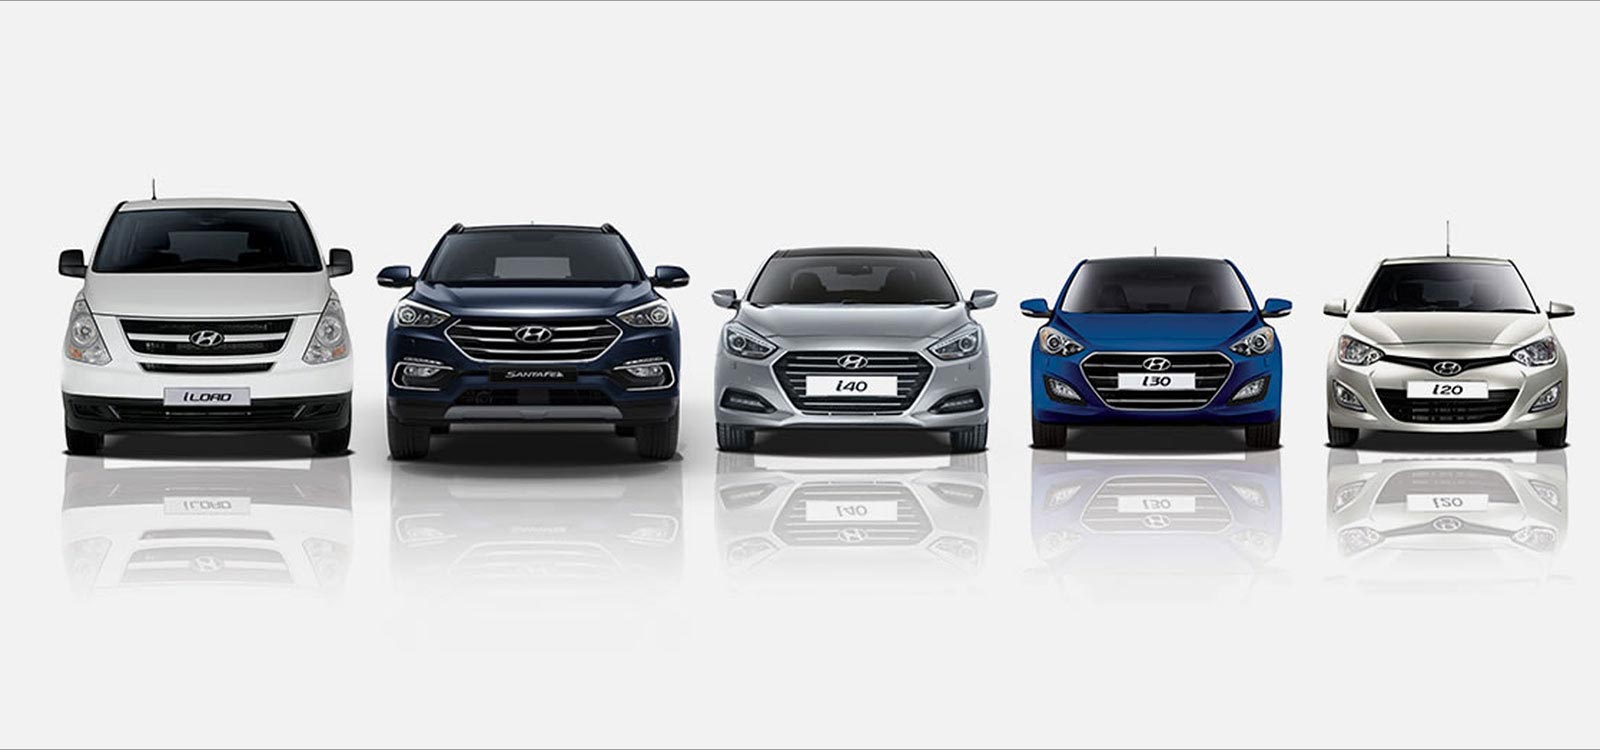 Hyundai promete no tener diseños aburridos 